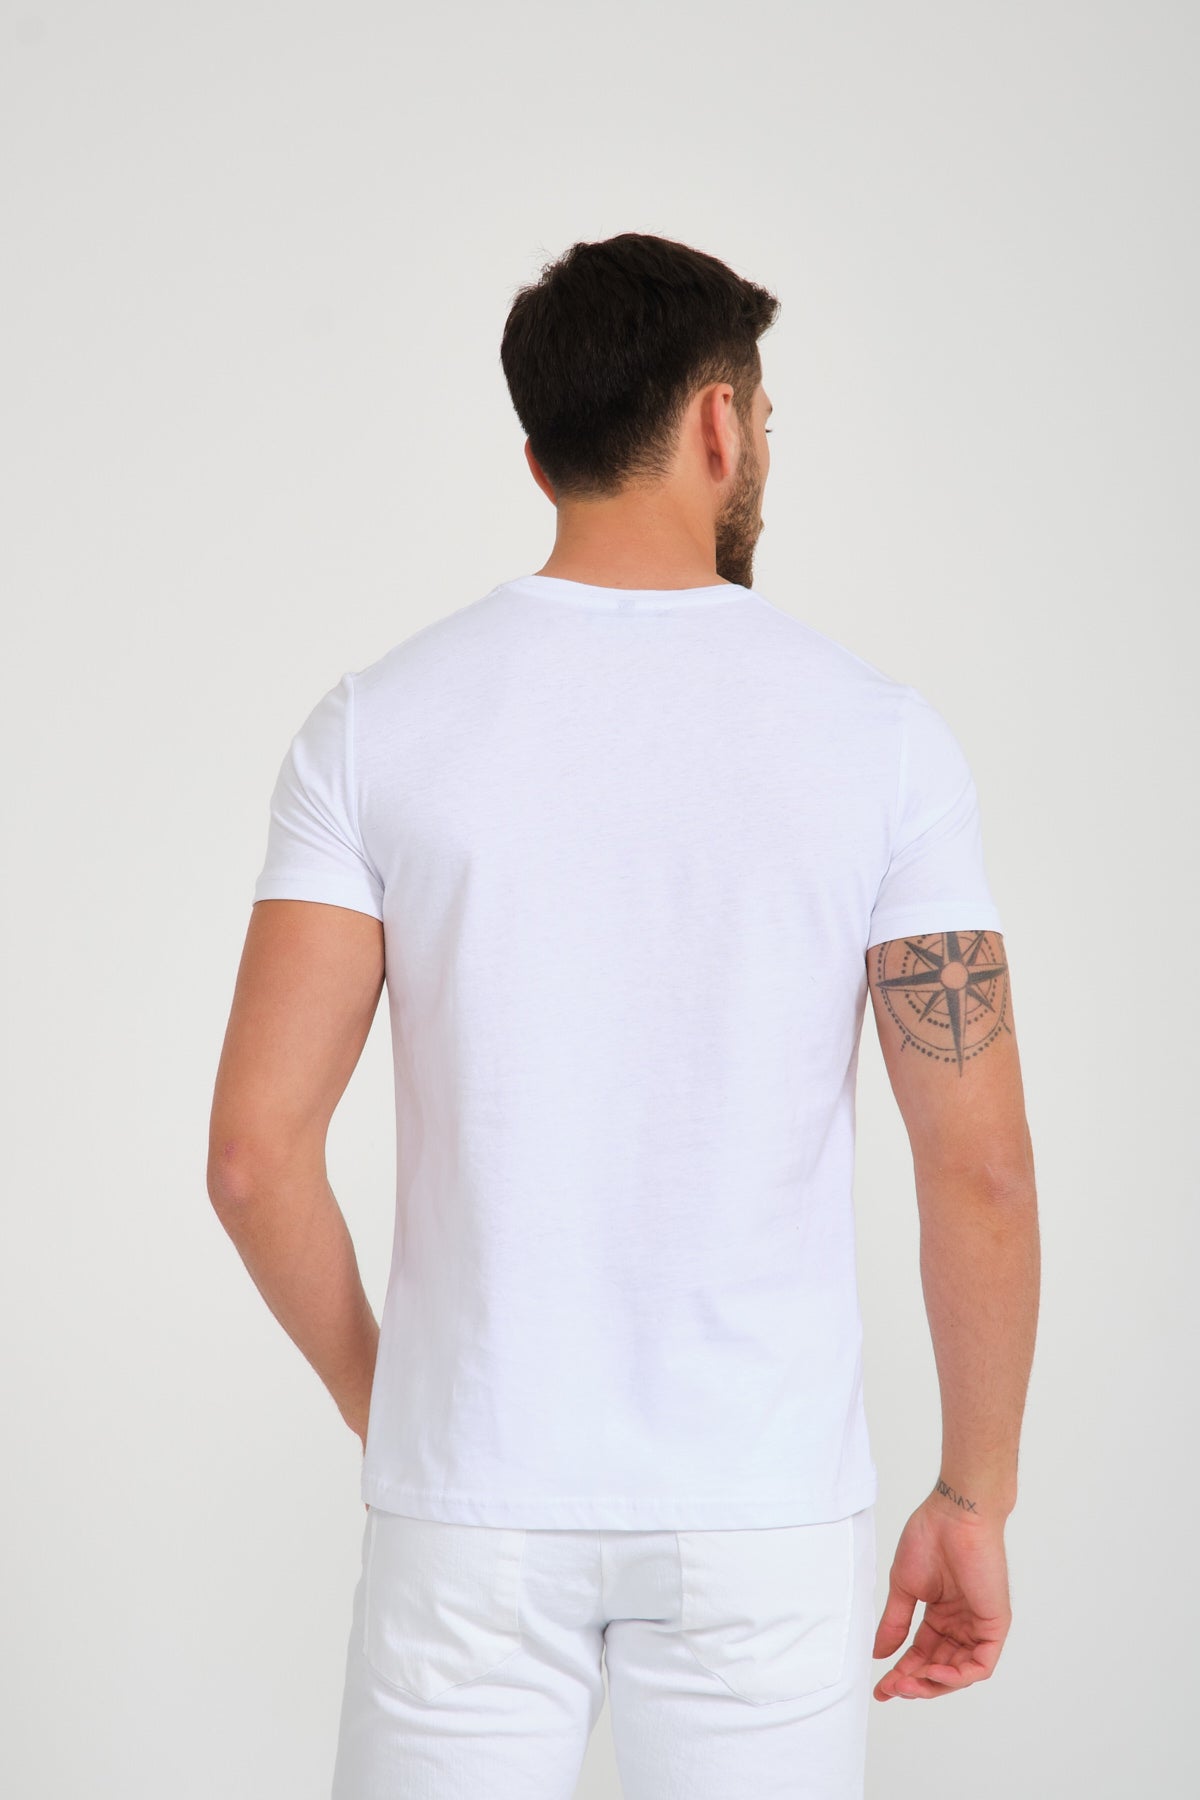 White Oversize T-Shirt